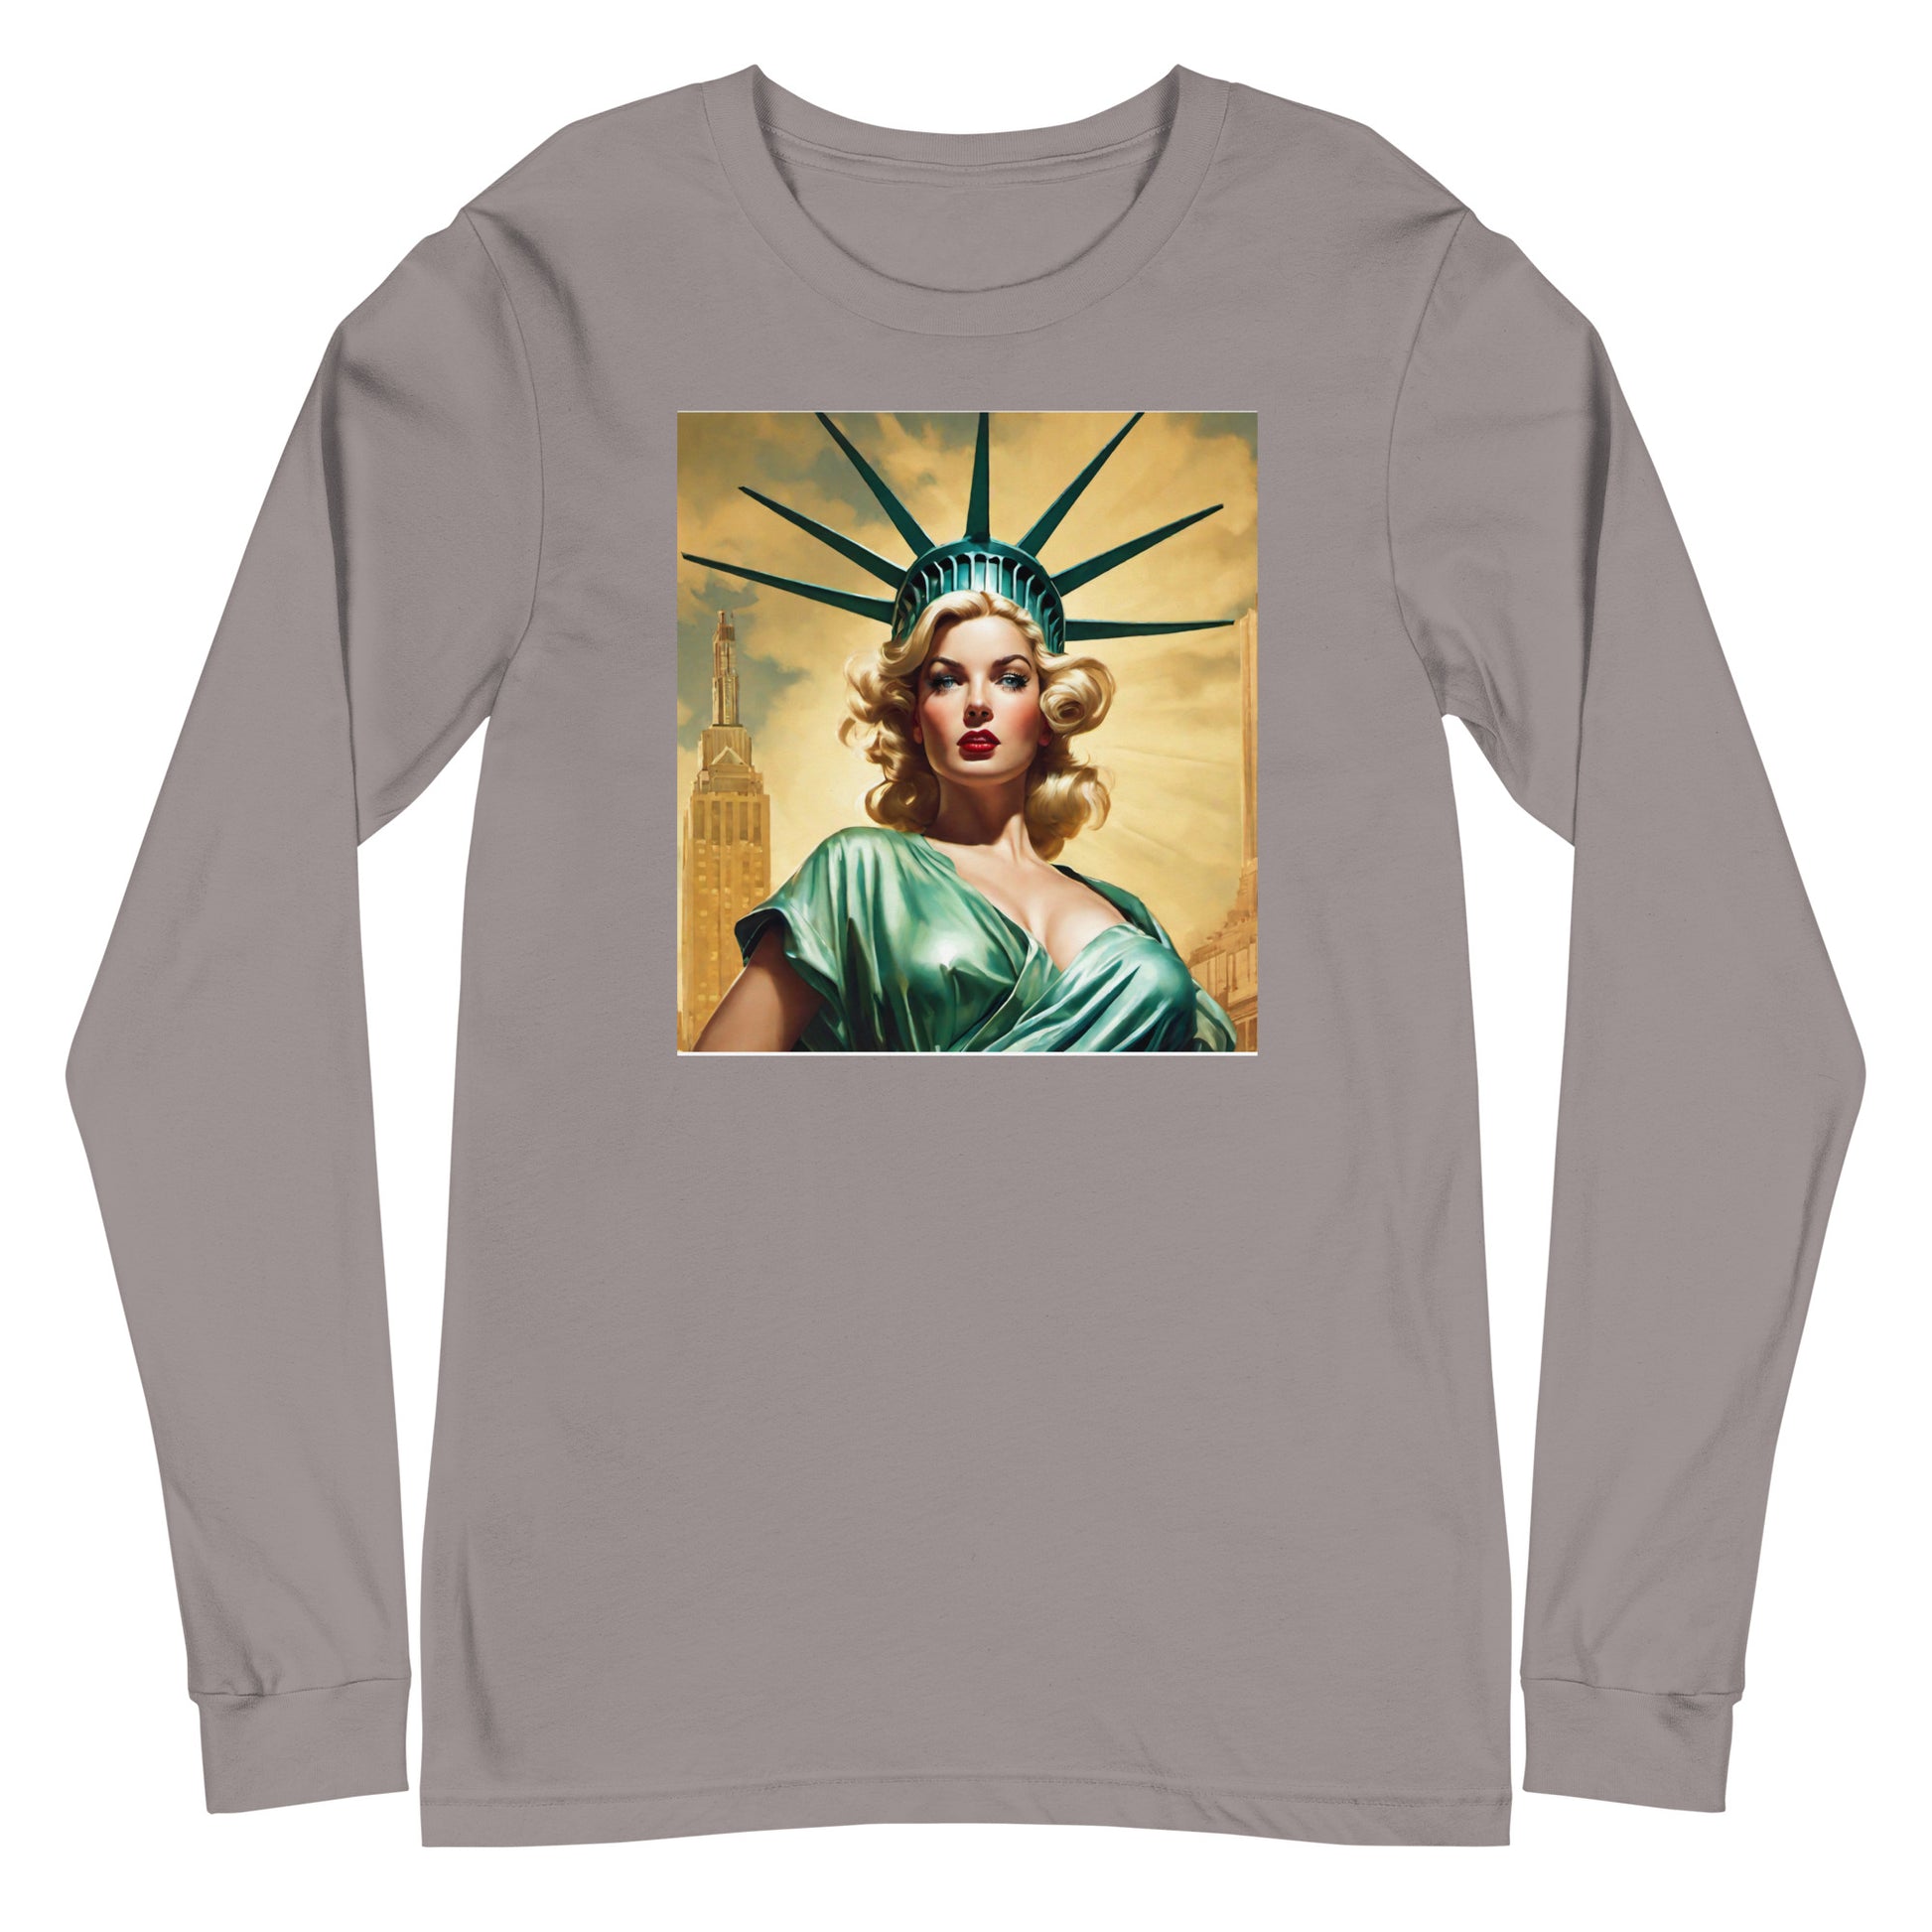 Beautiful Lady Liberty Long Sleeve Tee Storm